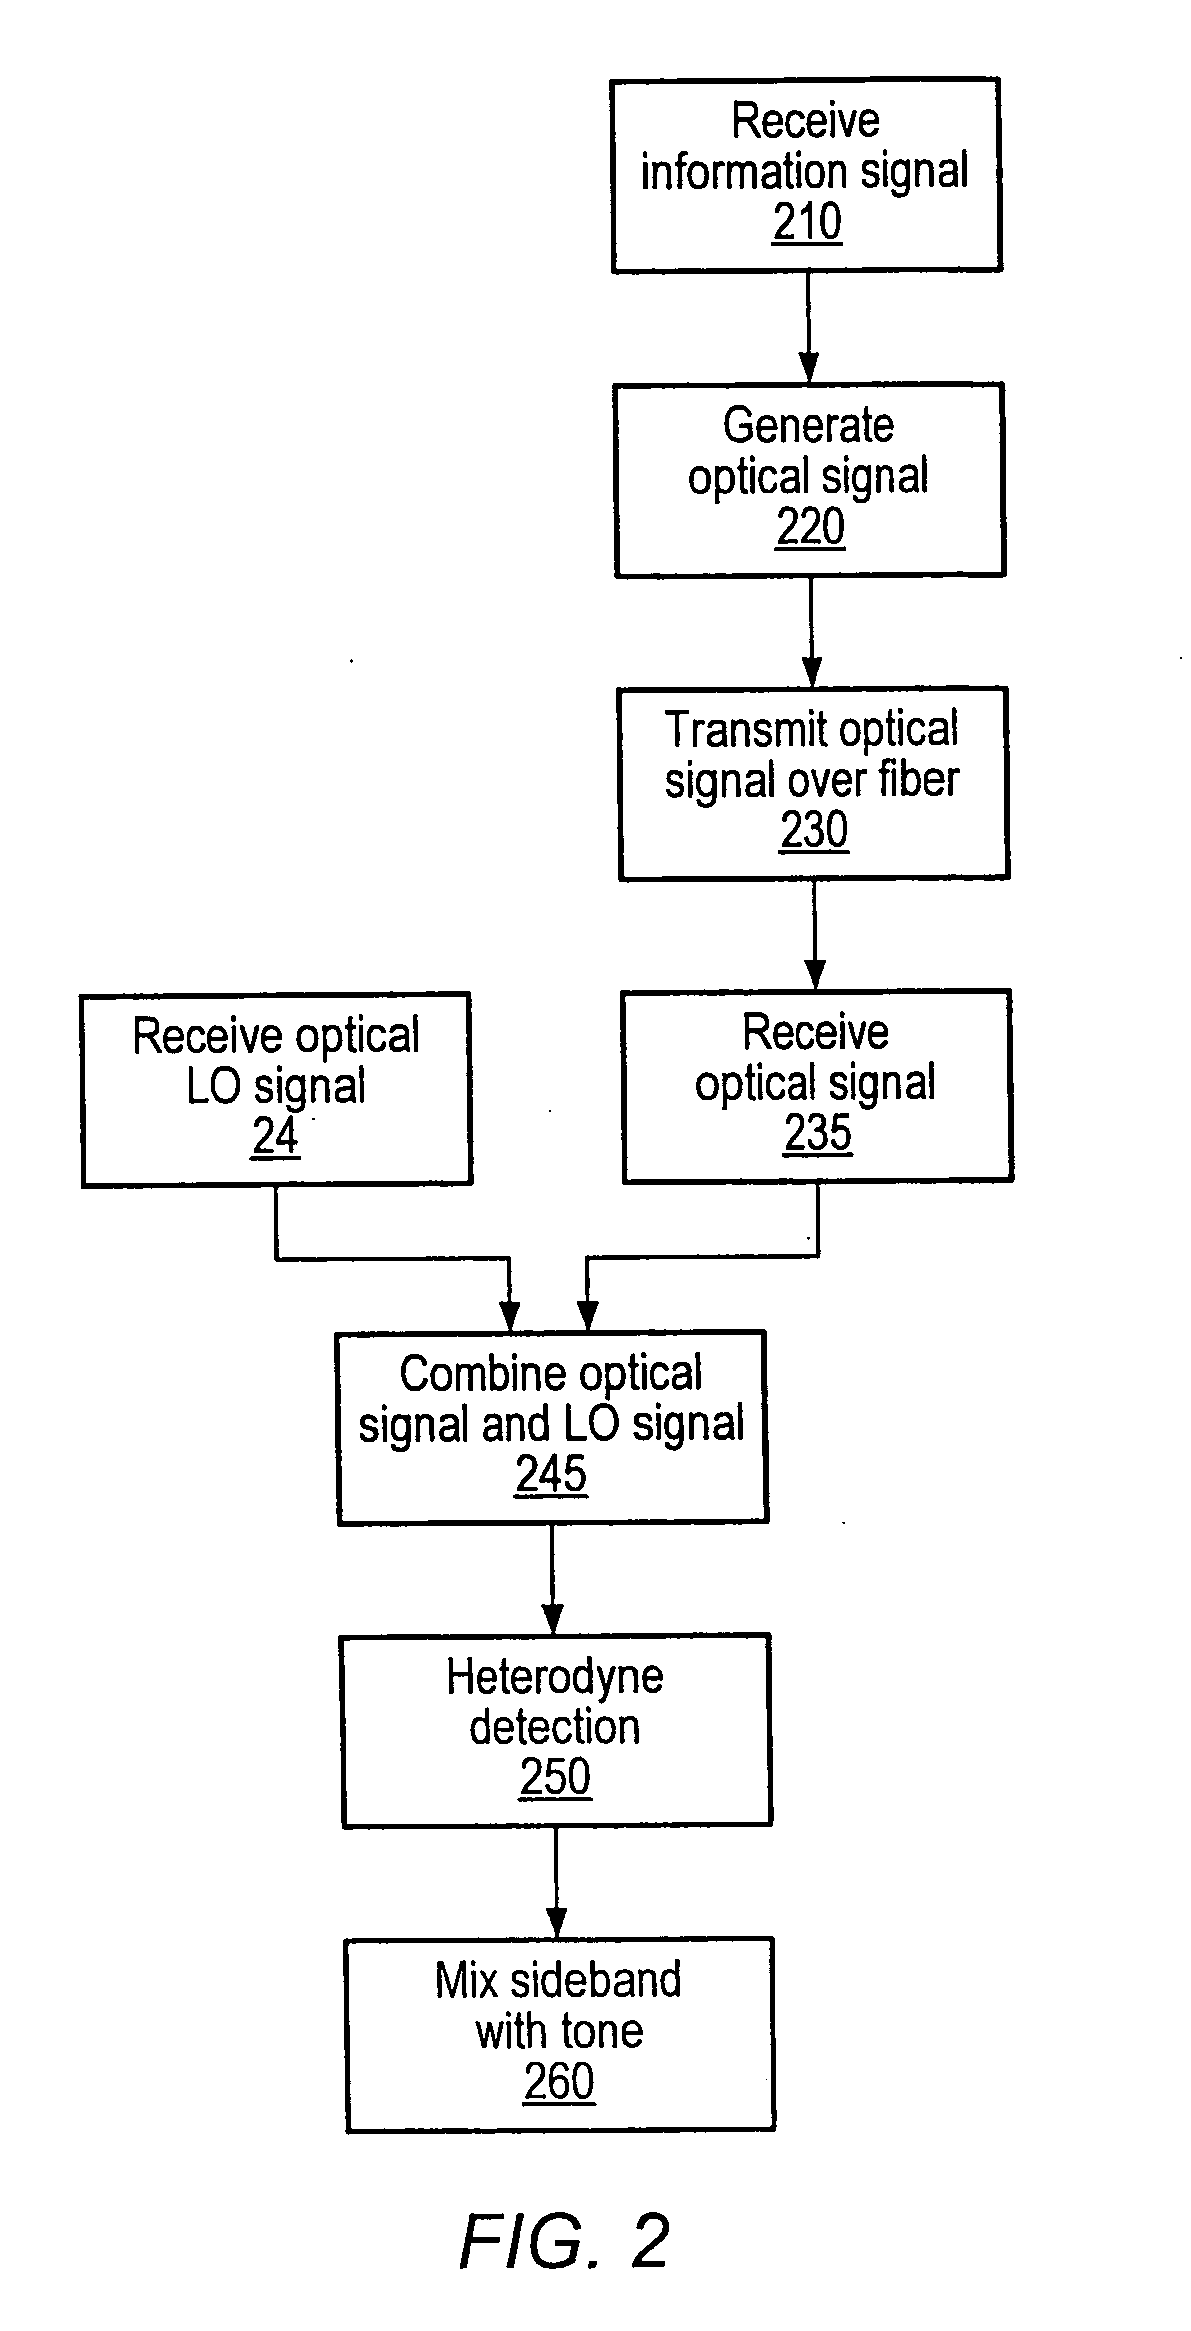 Optical communications using multiplexed single sideband transmission and heterodyne detection